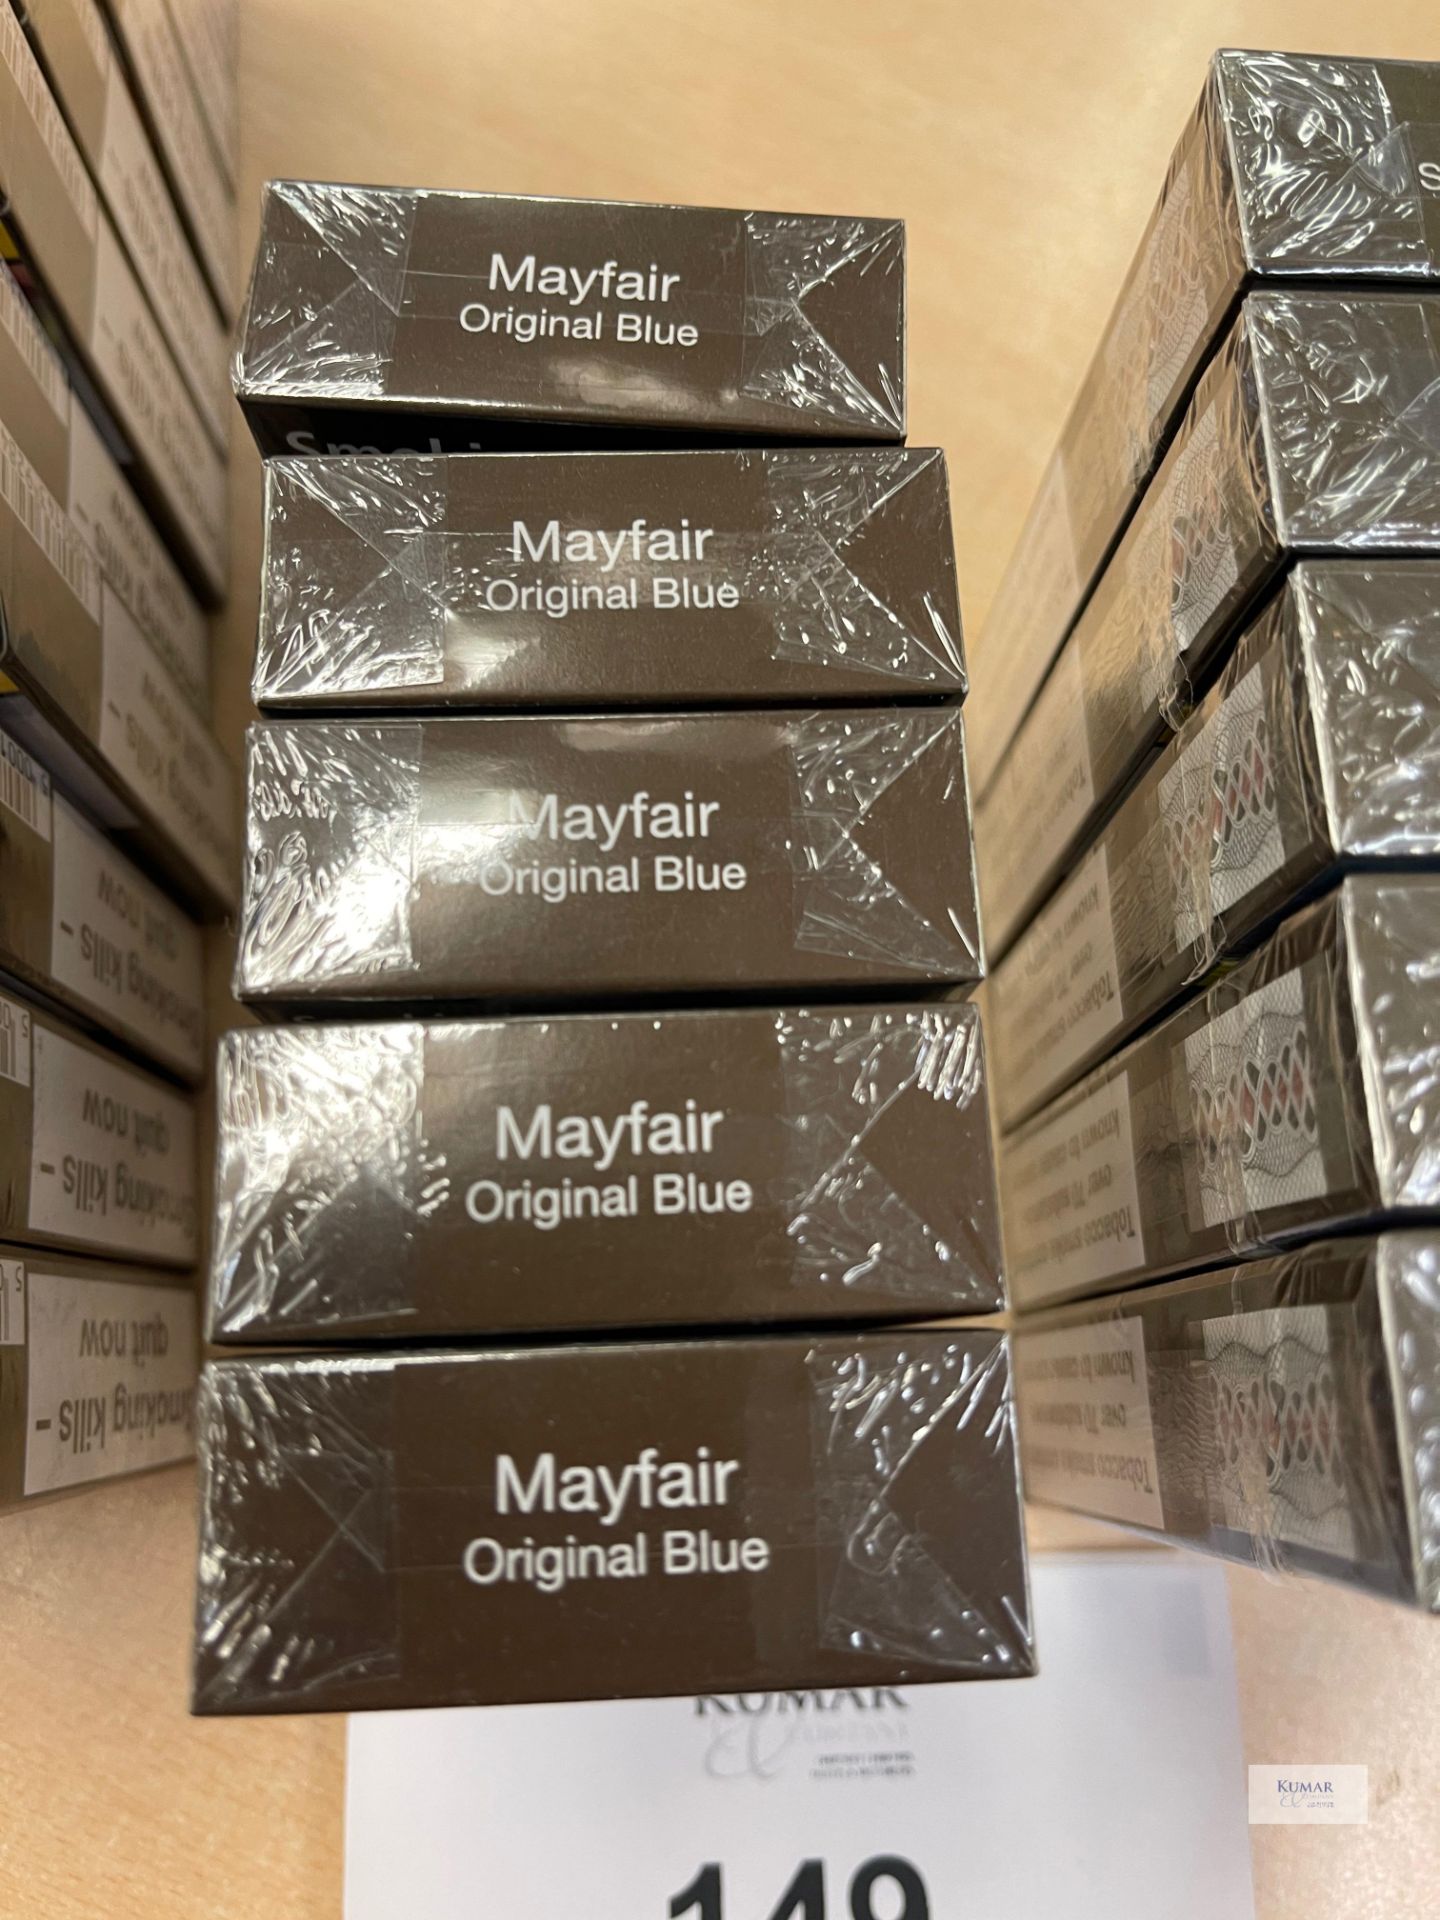 10 Packs: Mayfair Super kings Original Blue 20 Cigarettes, 5 Packs: Mayfair Original Blue 20 - Image 6 of 10